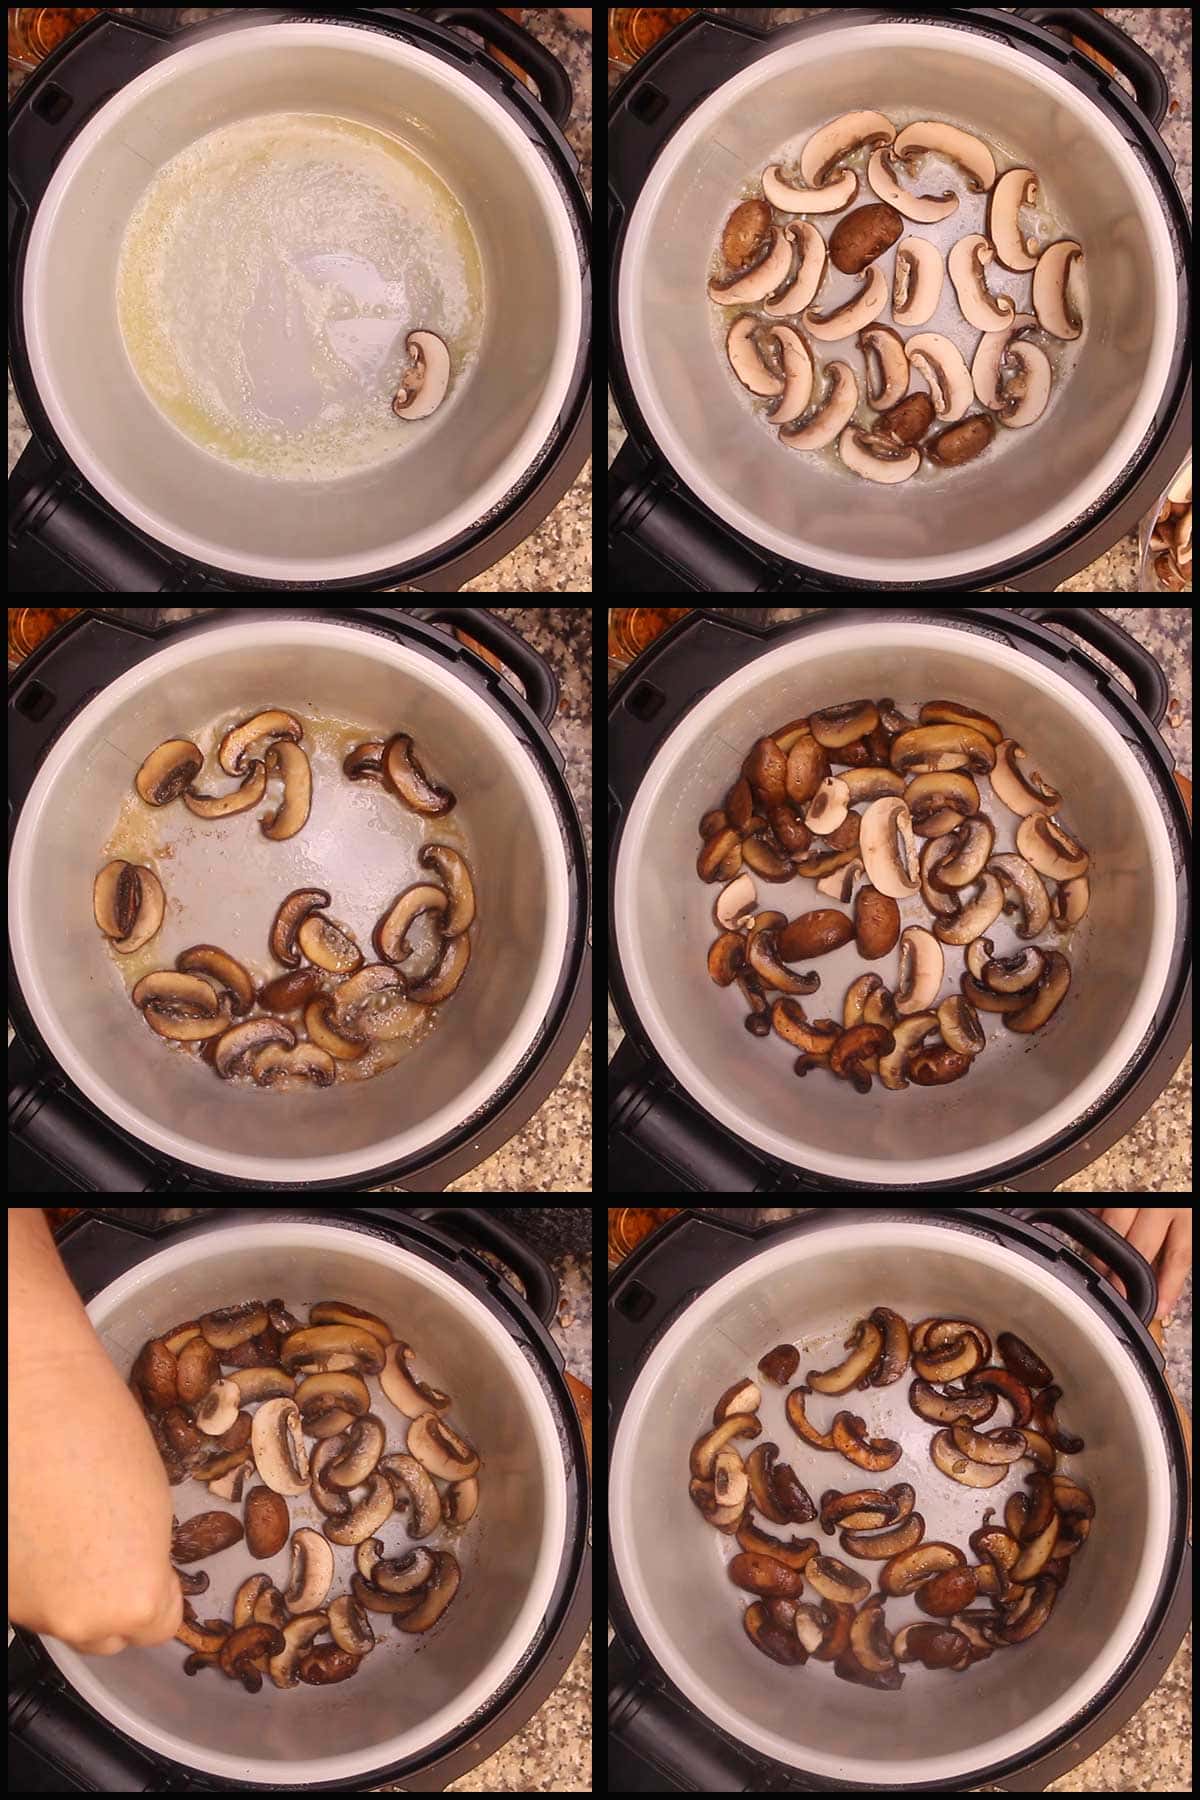 sauteing mushrooms until golden brown